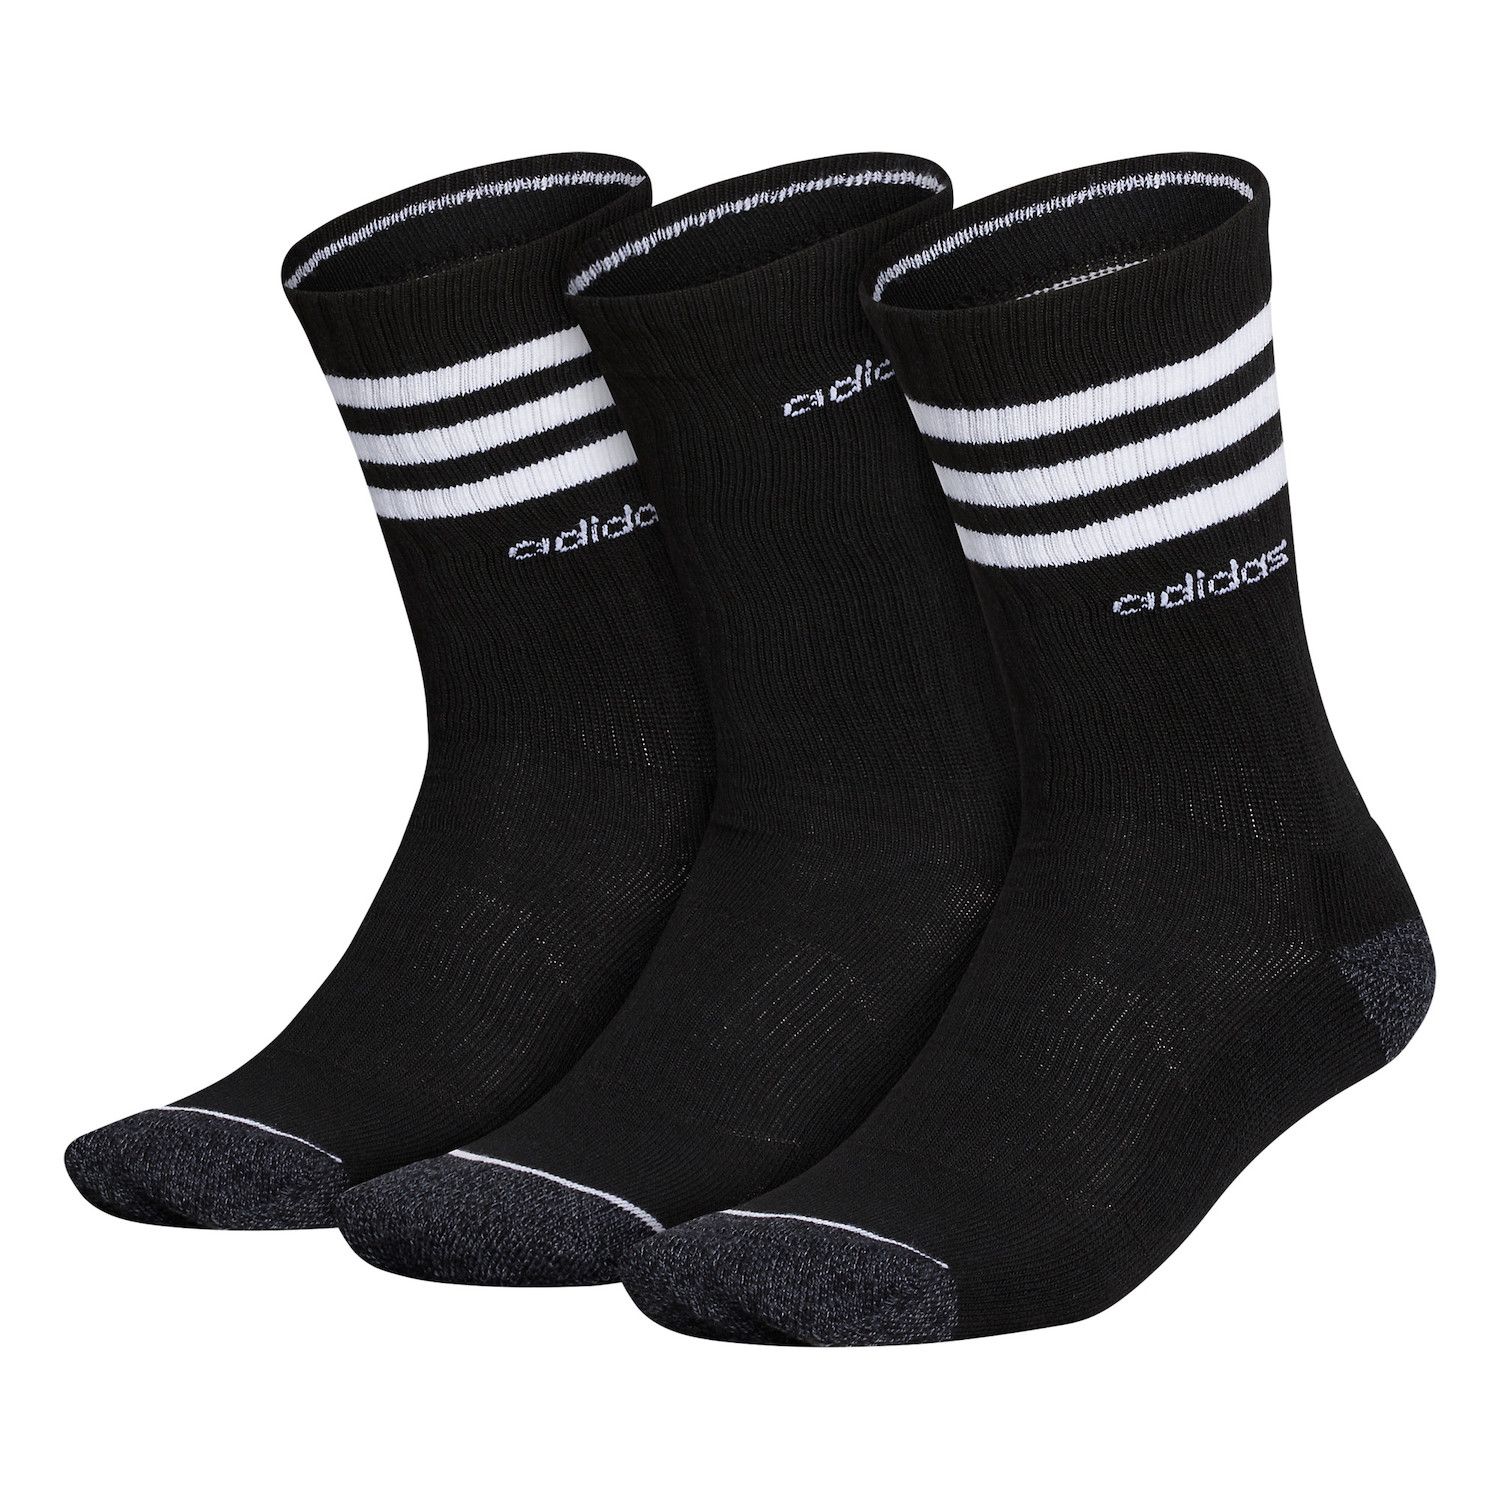 adidas 3 stripe crew socks